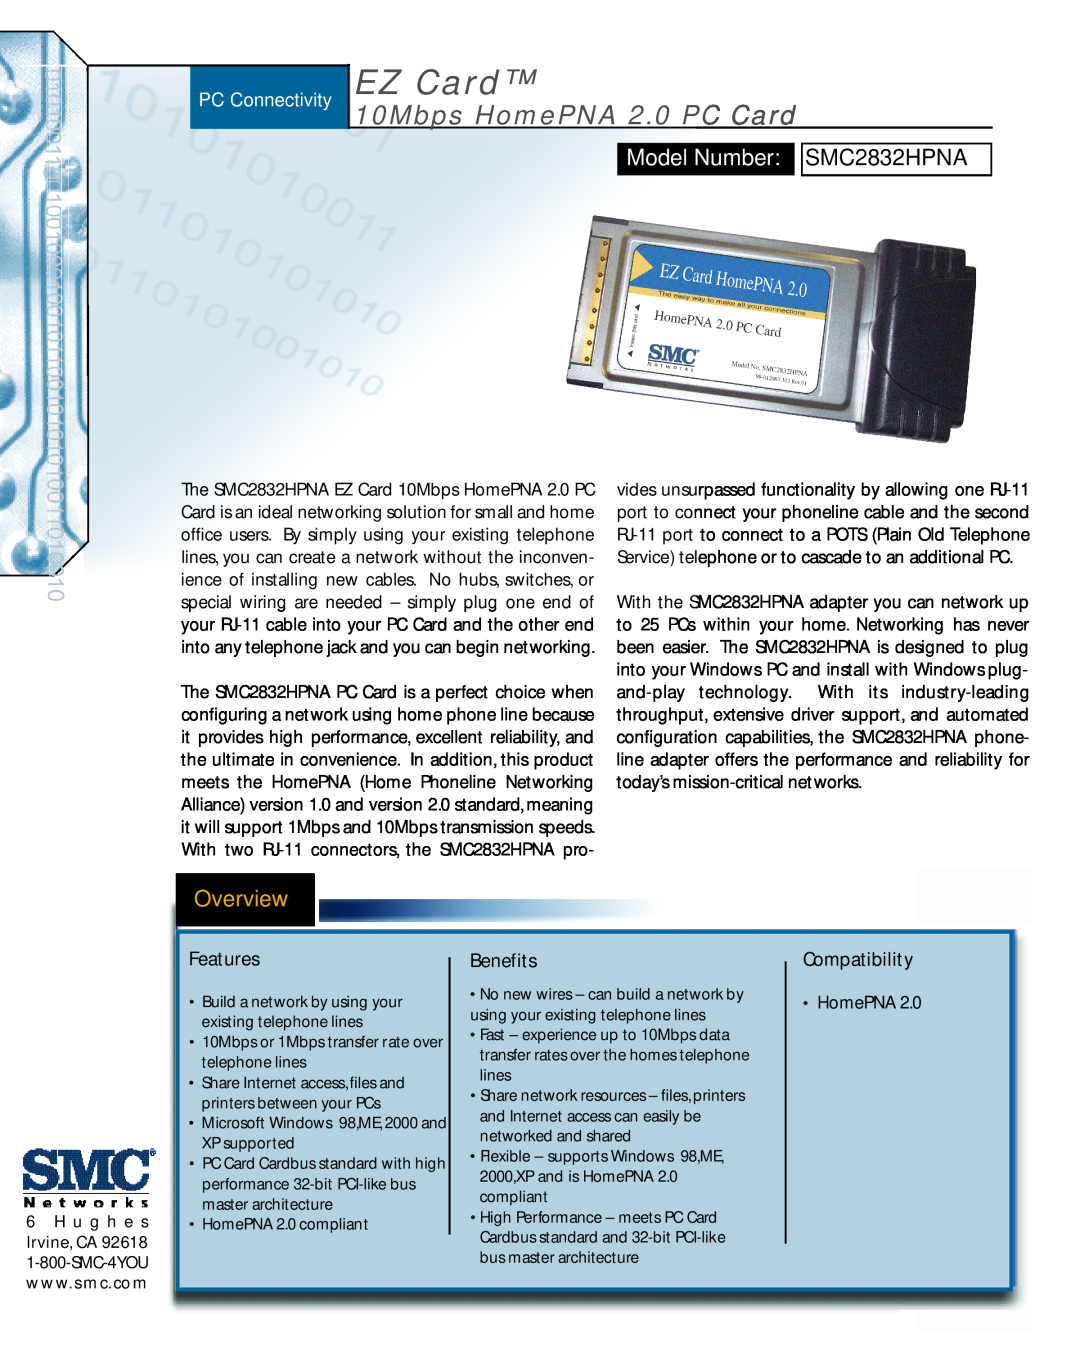 SMC Networks manual EZ Card, 10Mbps HomePNA 2.0 PC Card, PC Connectivity, Model Number SMC2832HPNA, Overview 